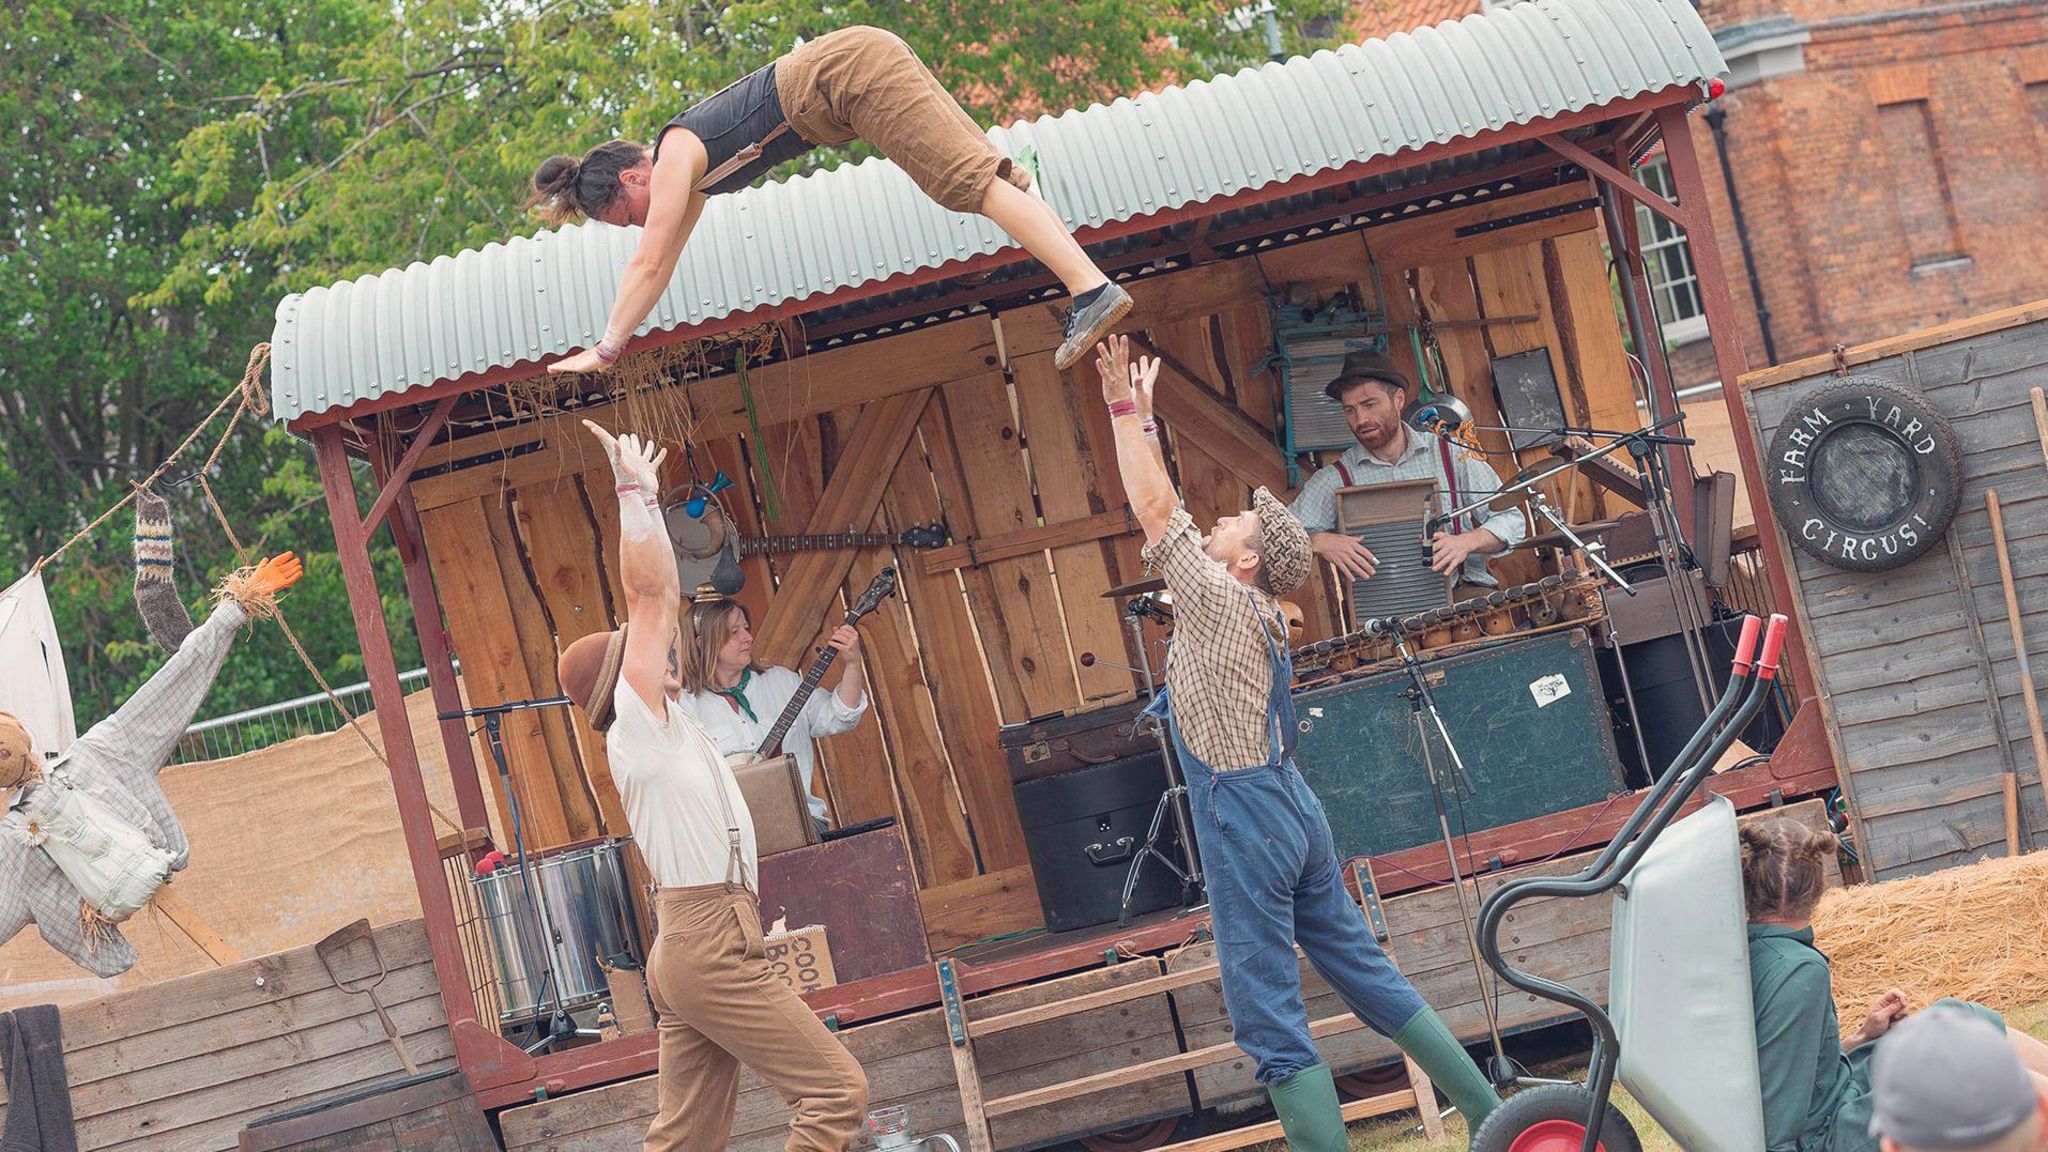 Three people perform acrobatics at the GO festival